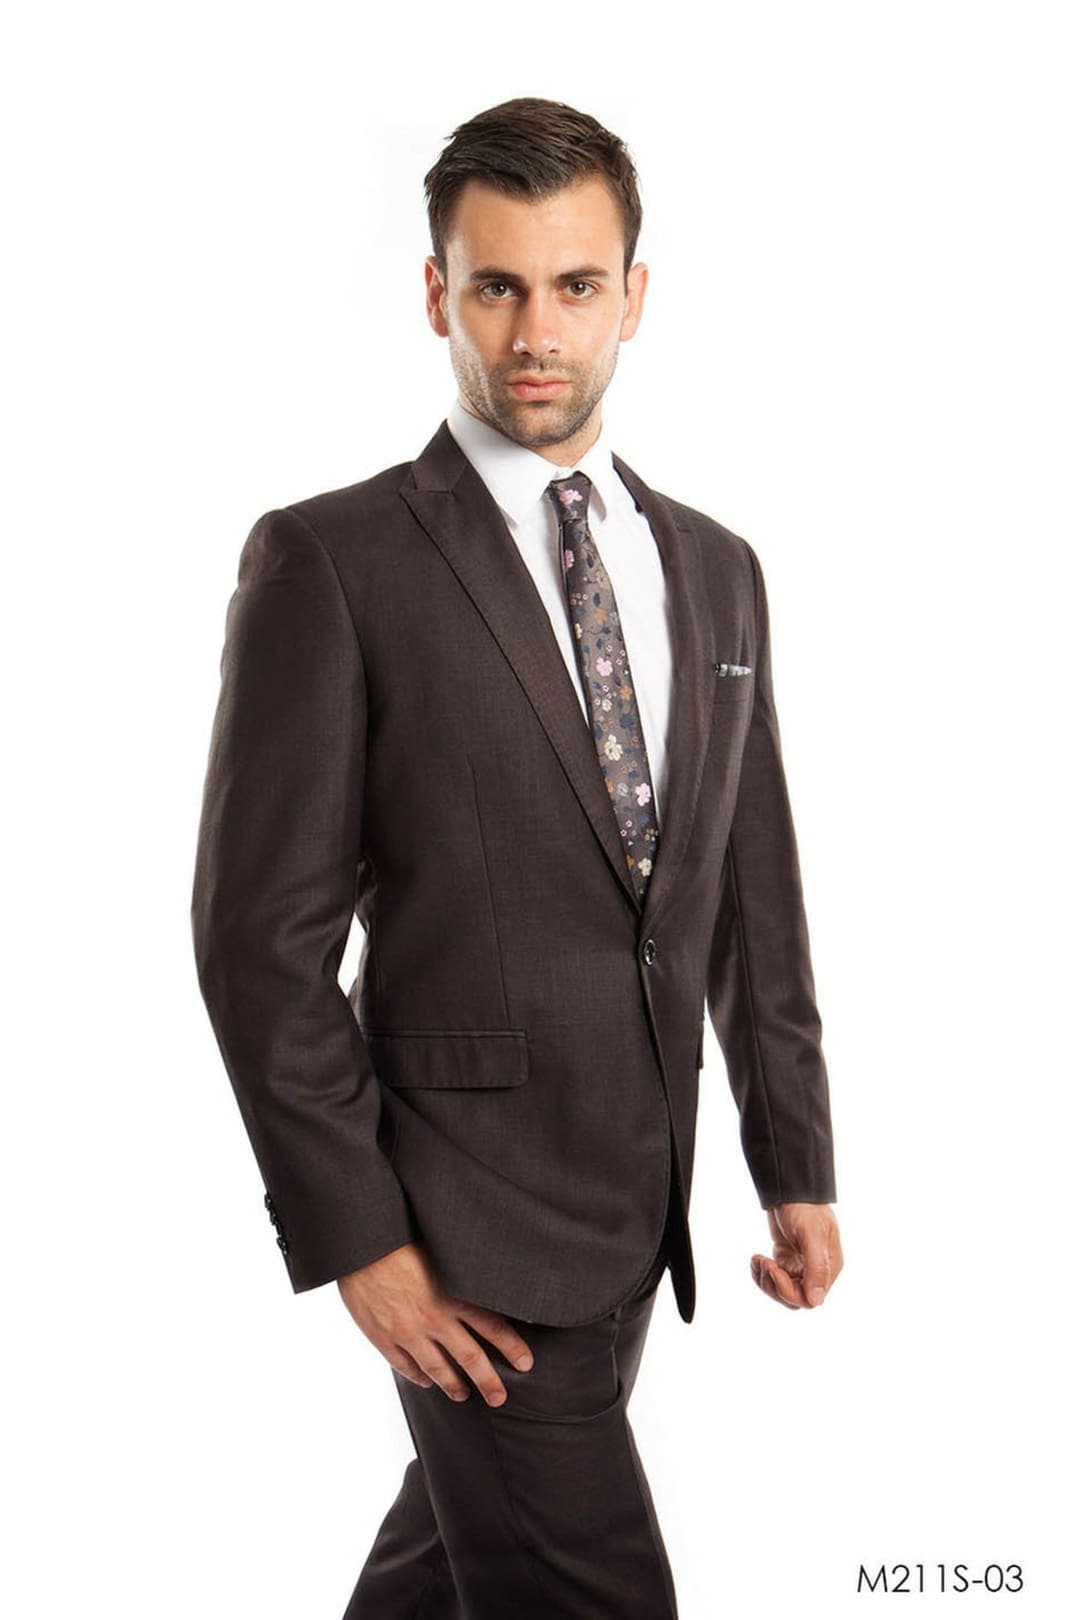 Men’s Two Piece Ultra Slim Fit Solid Suit - DARK GREY - 03 / US34S/W28 / EU44S/W38 - Mens Suits